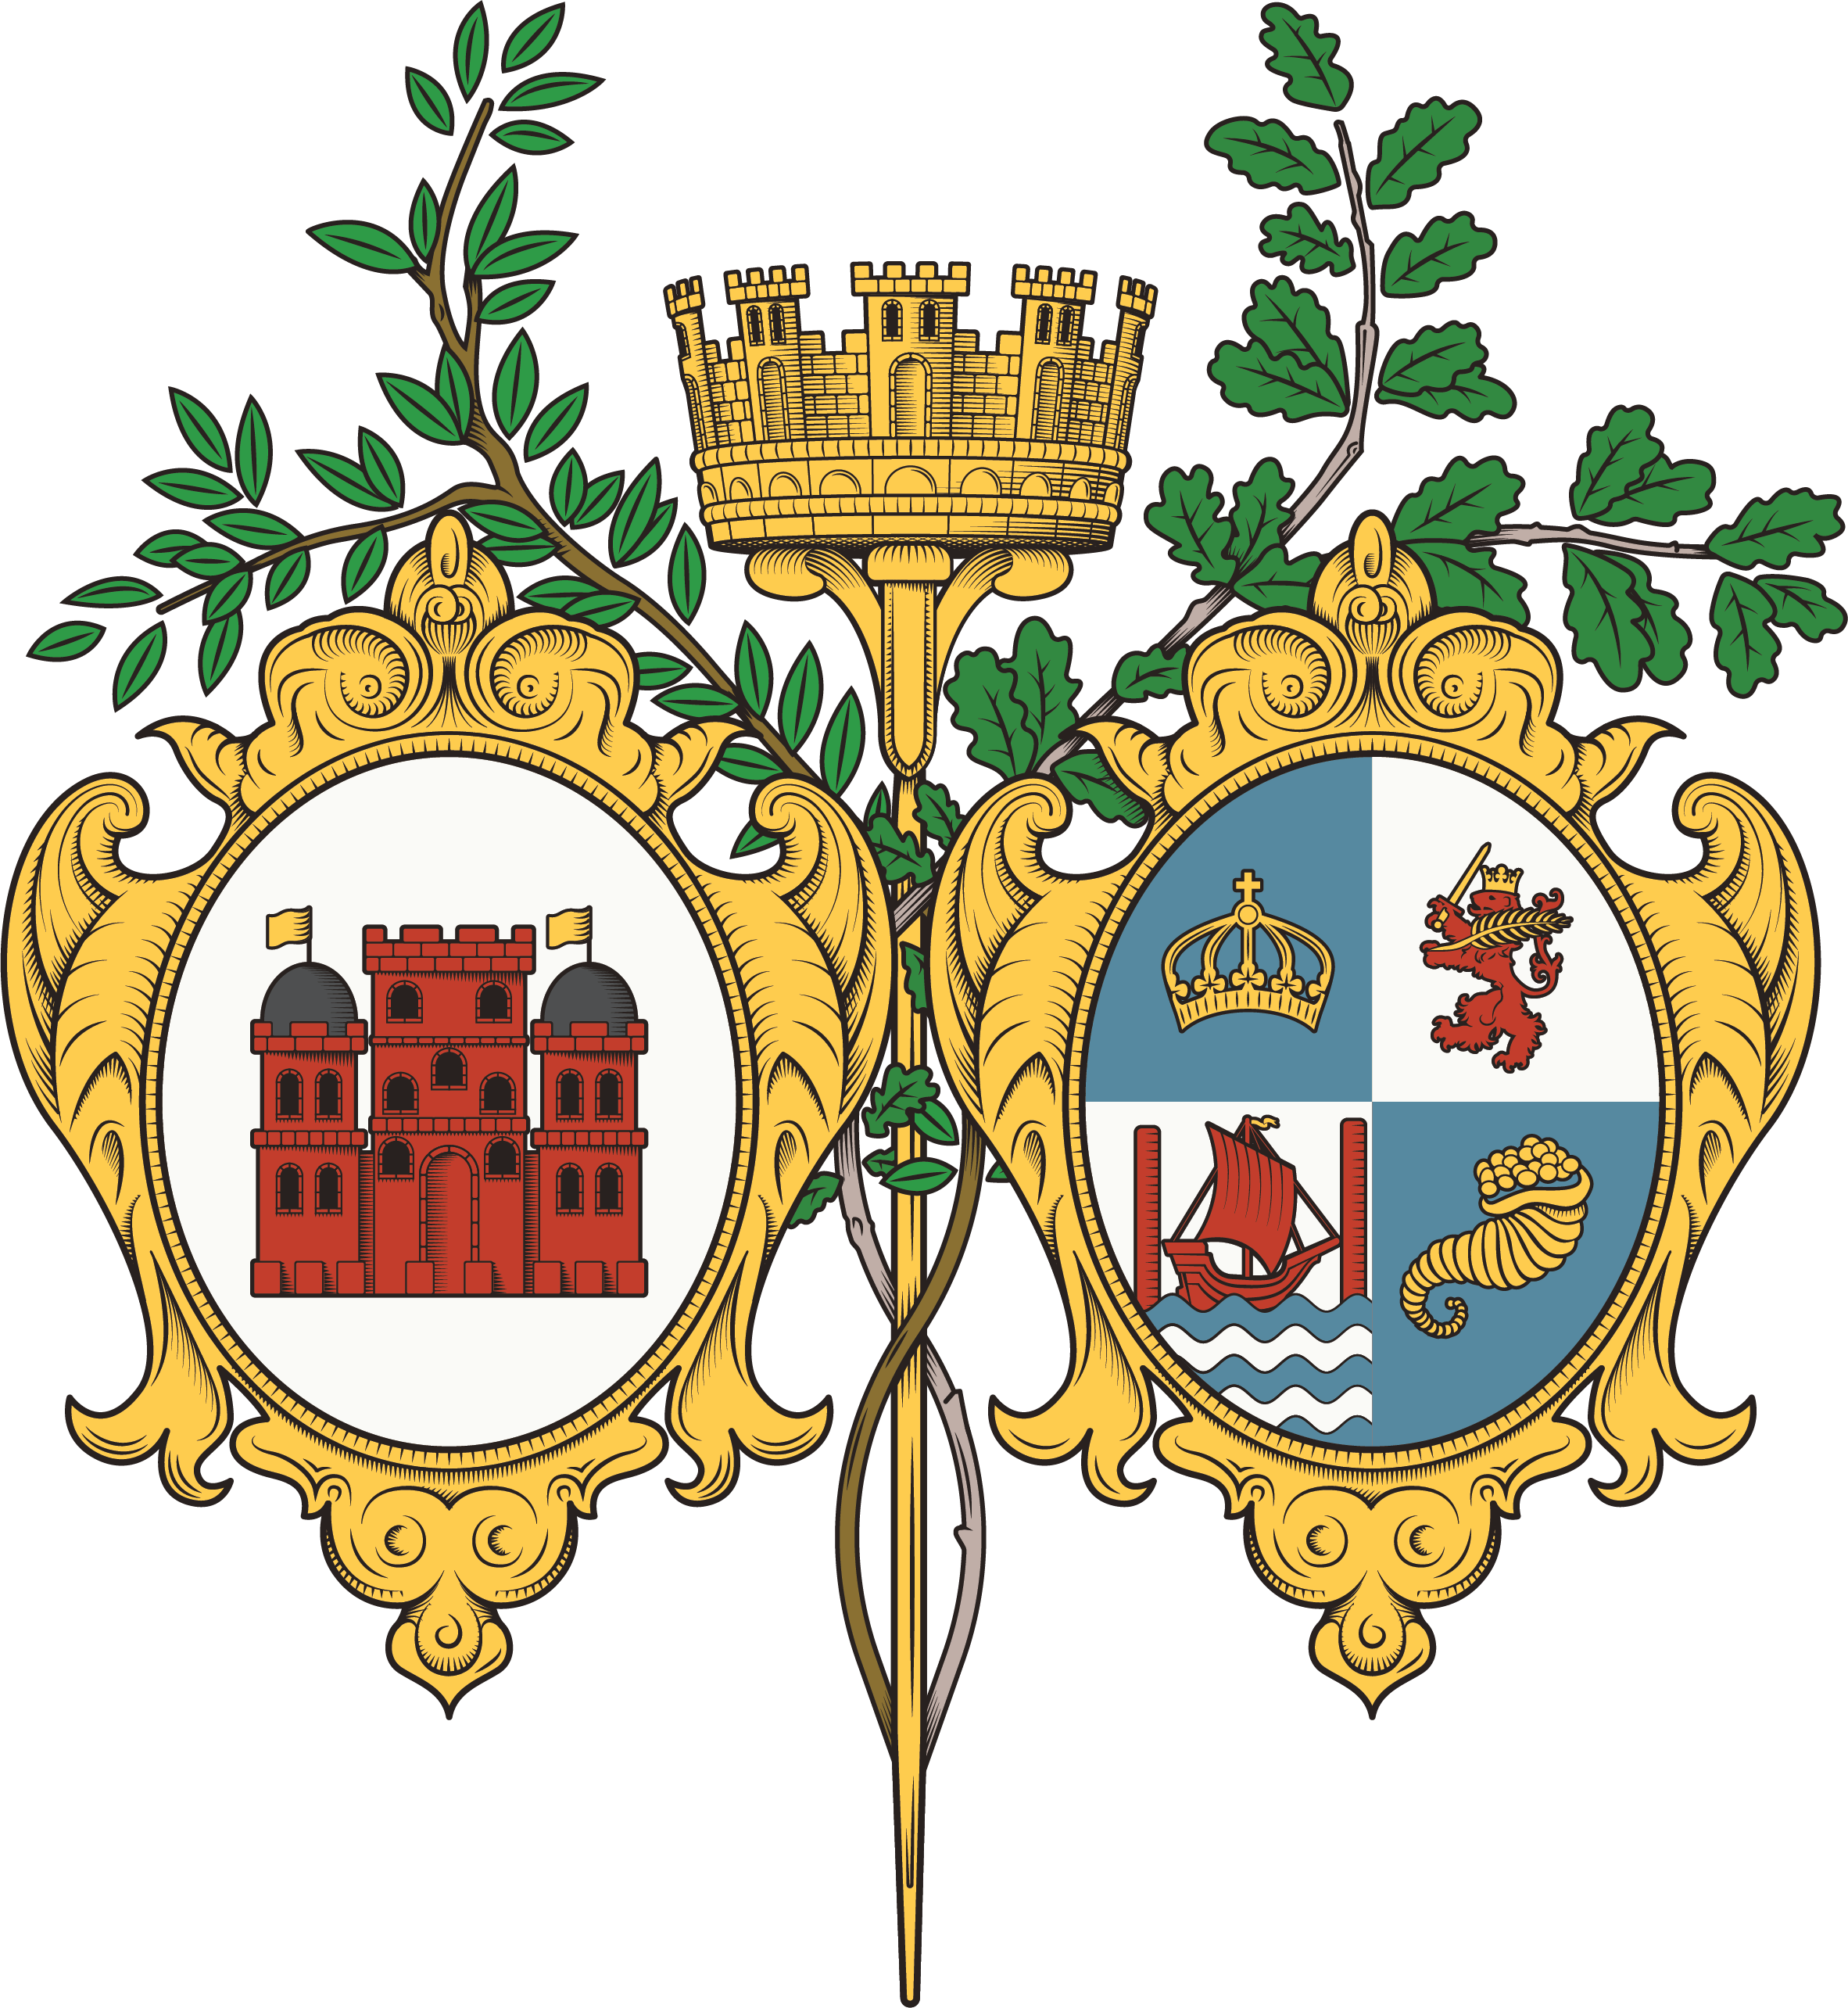 Helsingkrona nation